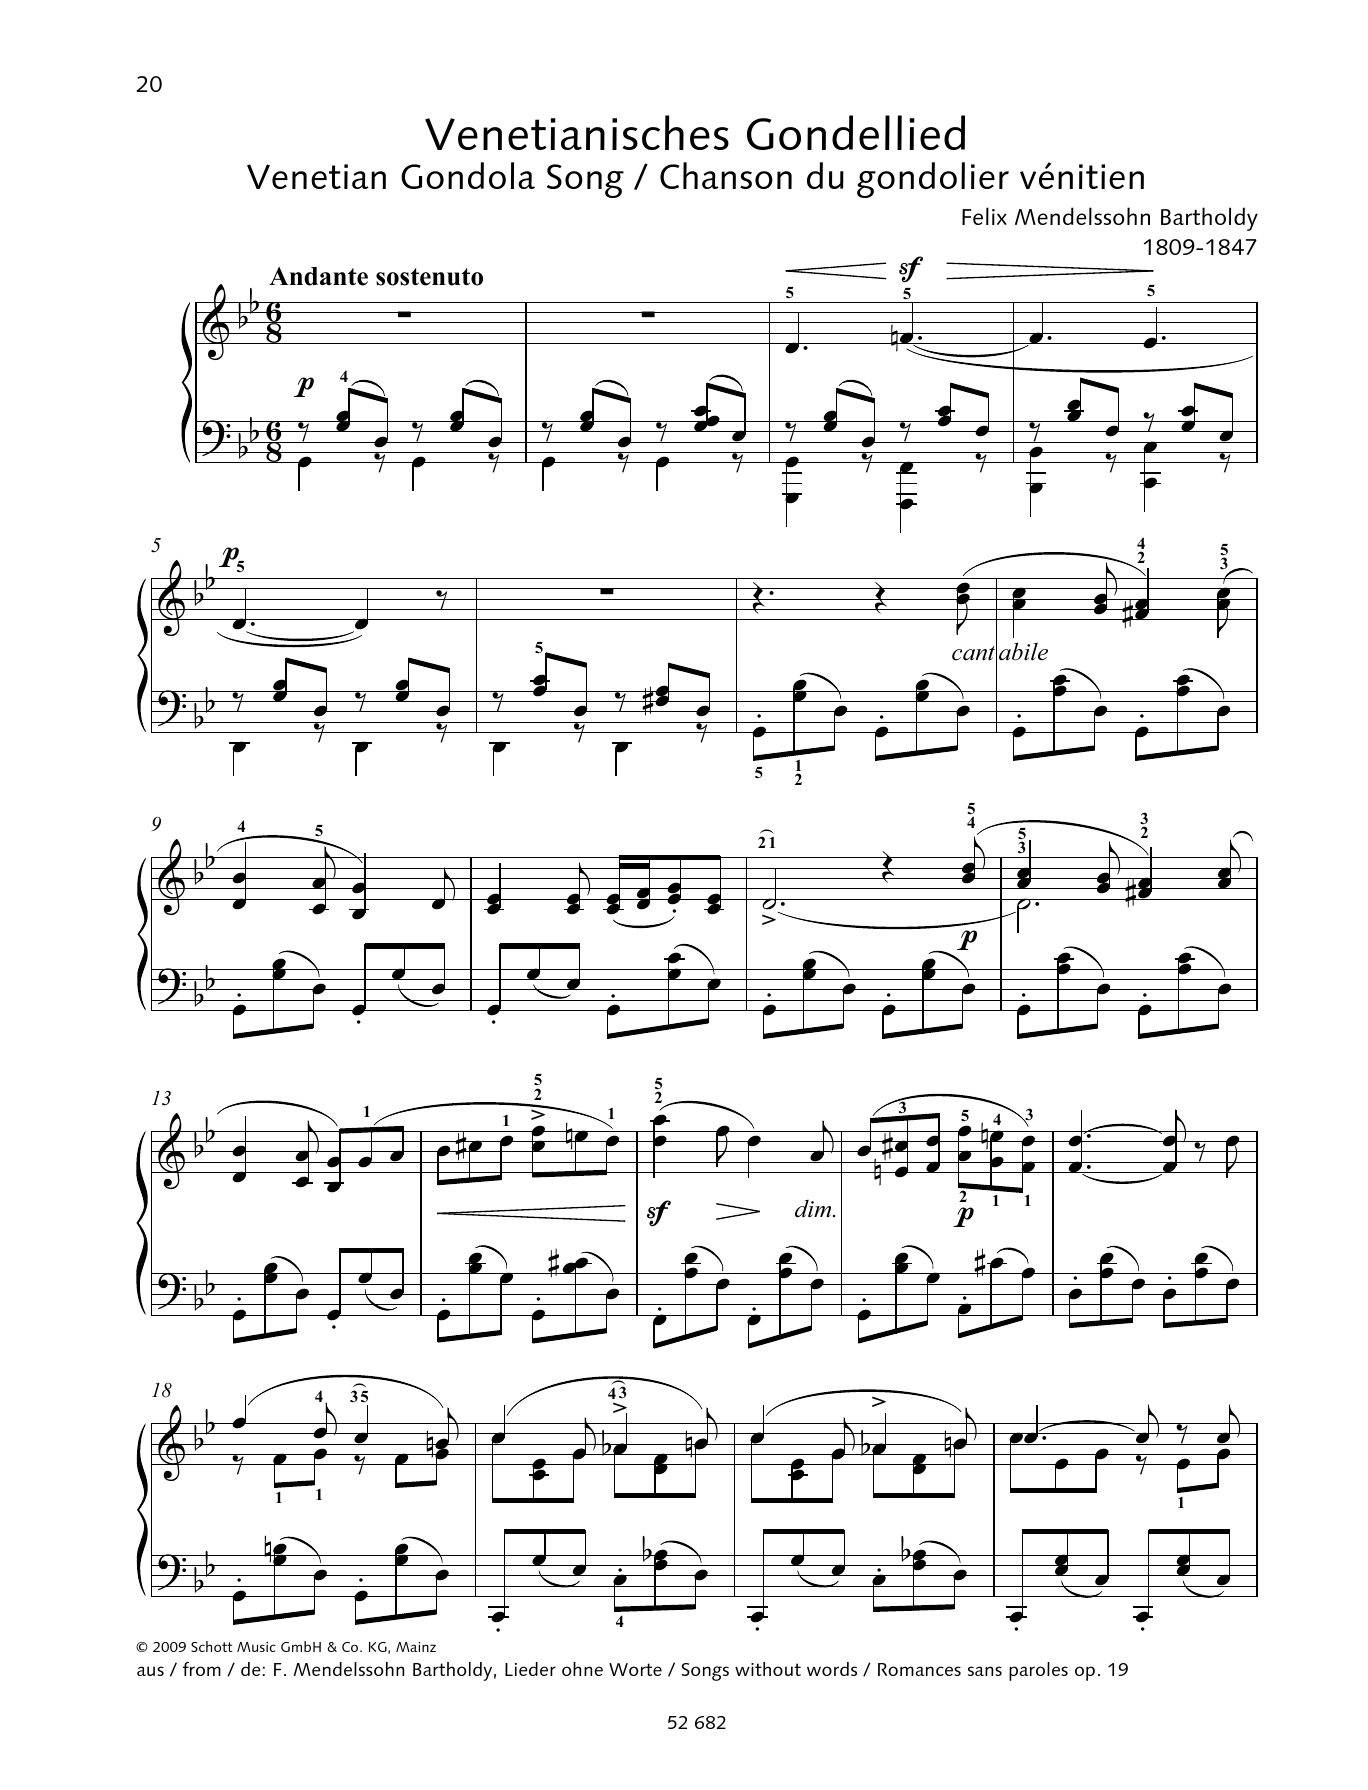 Felix Mendelssohn Bartholdy Venetian Gondola Song in G minor Sheet Music Notes & Chords for Piano Solo - Download or Print PDF